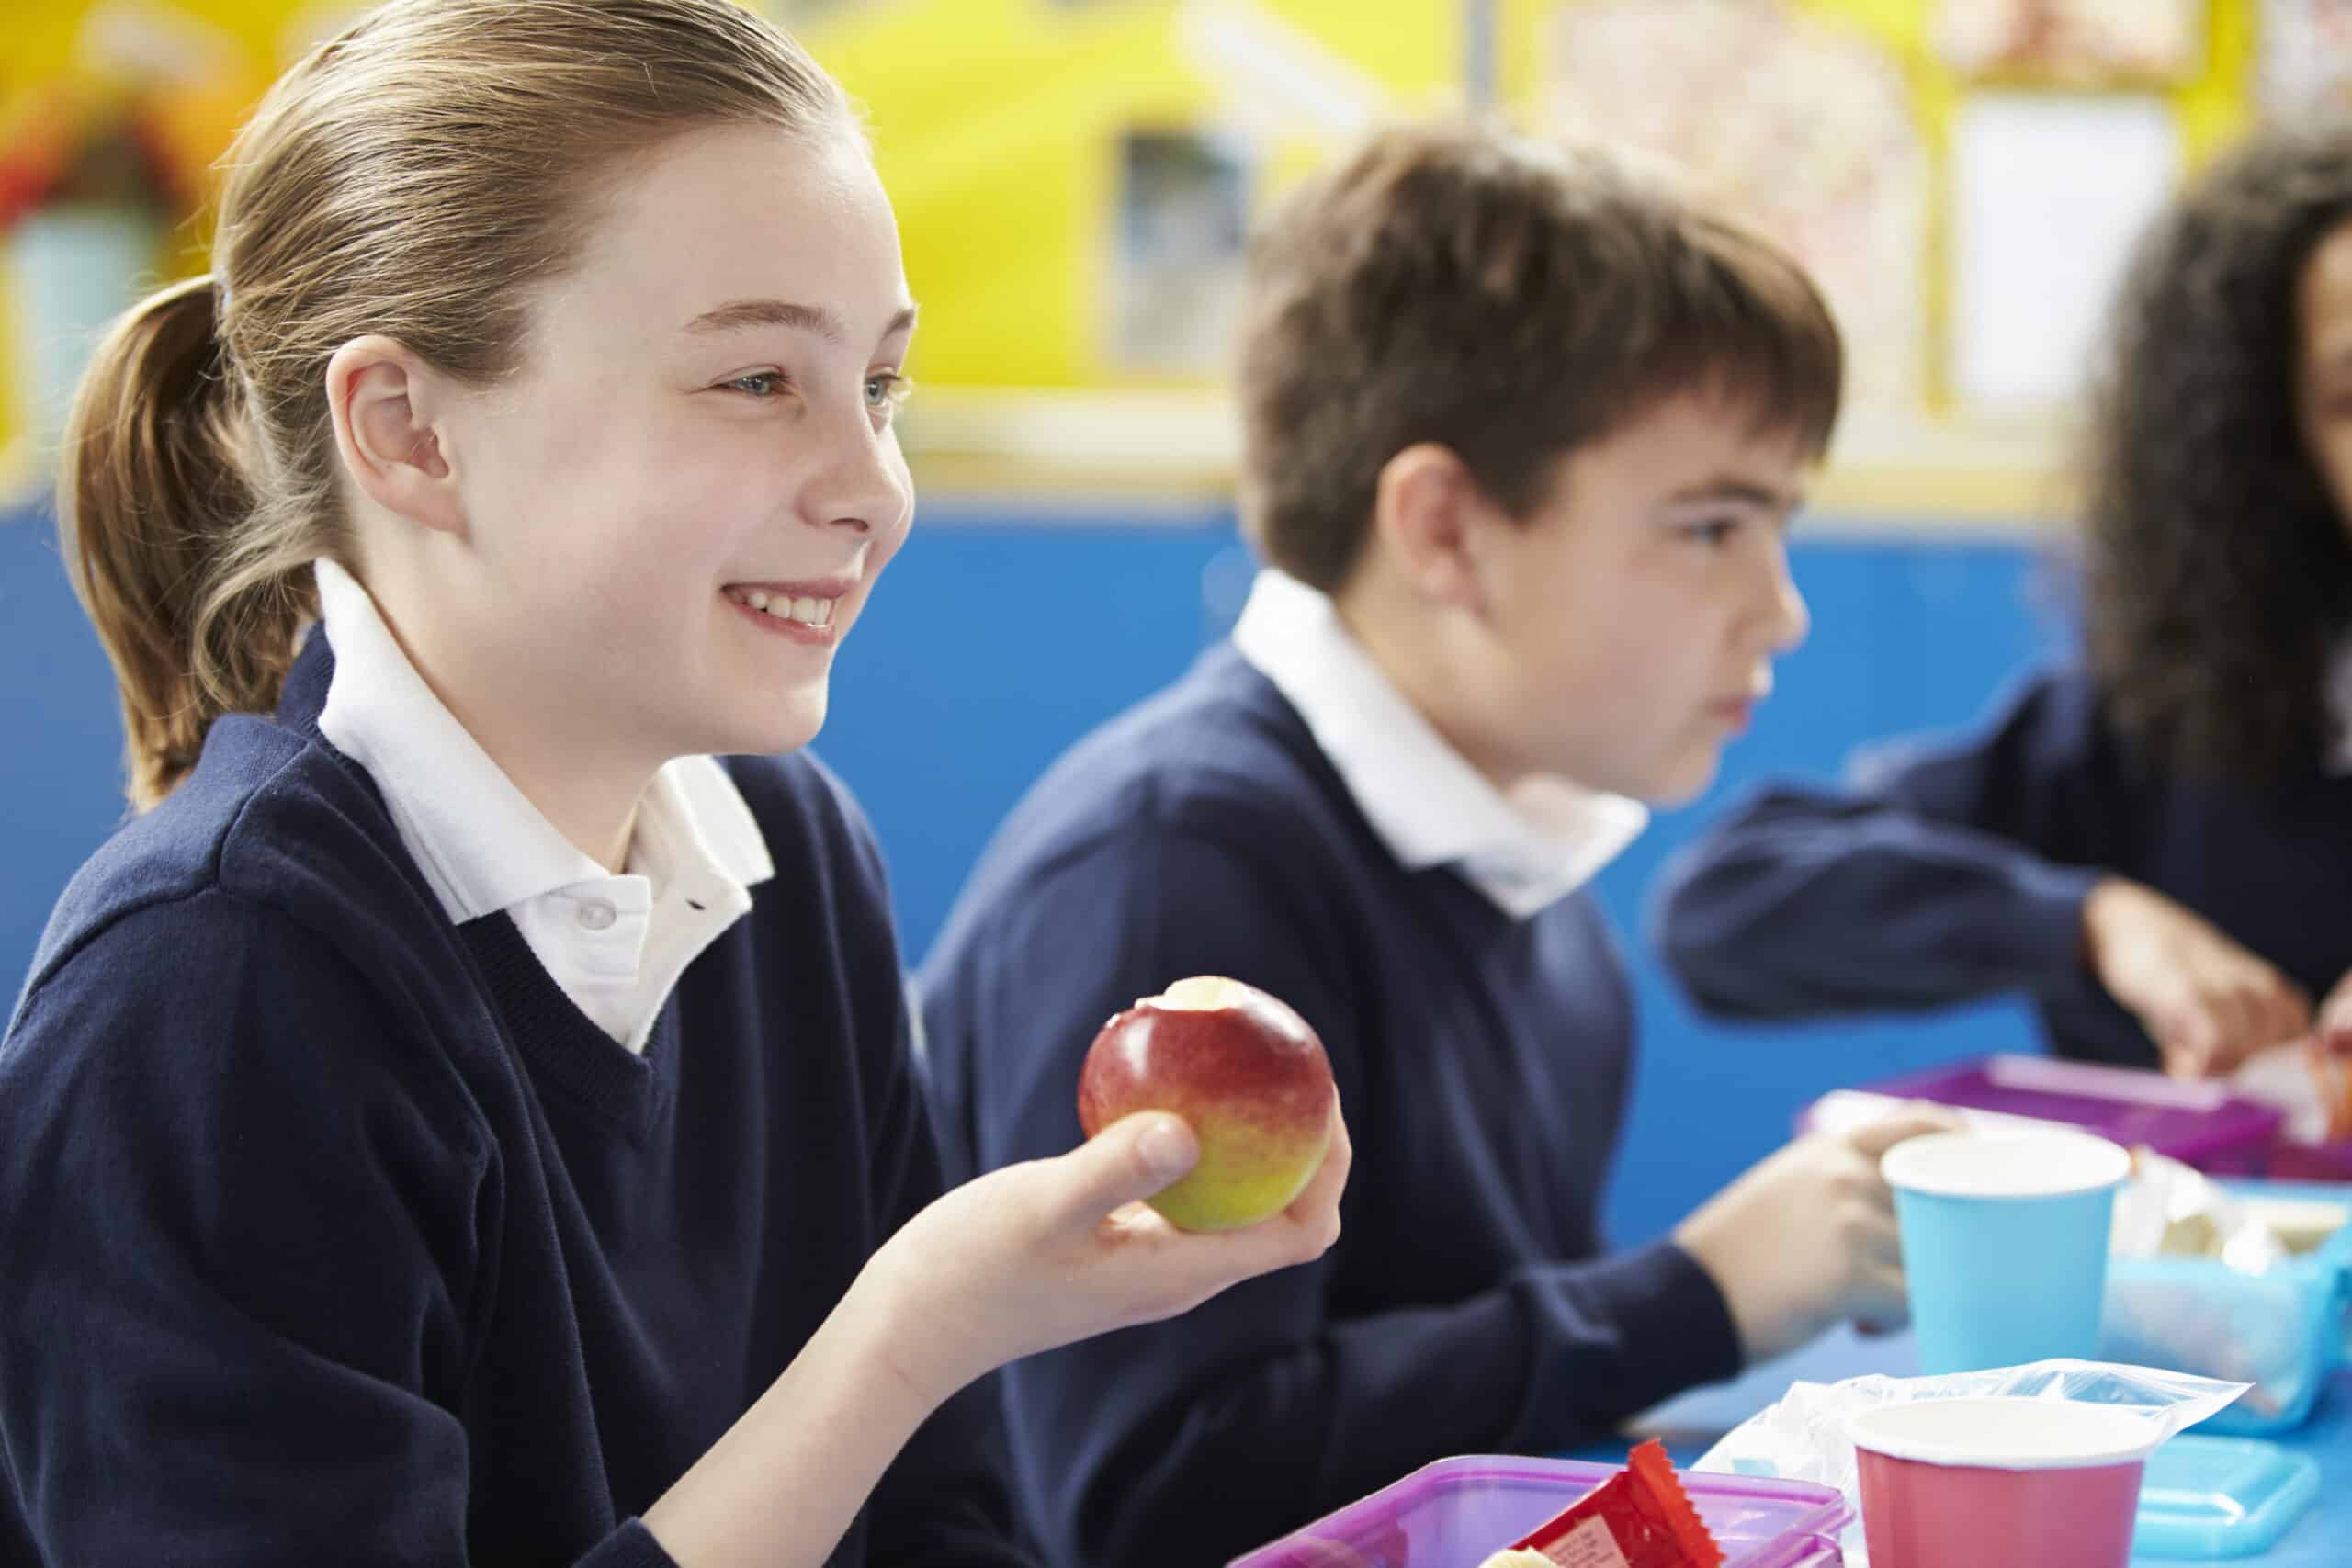 School girl eating apple in a nurture group snack time